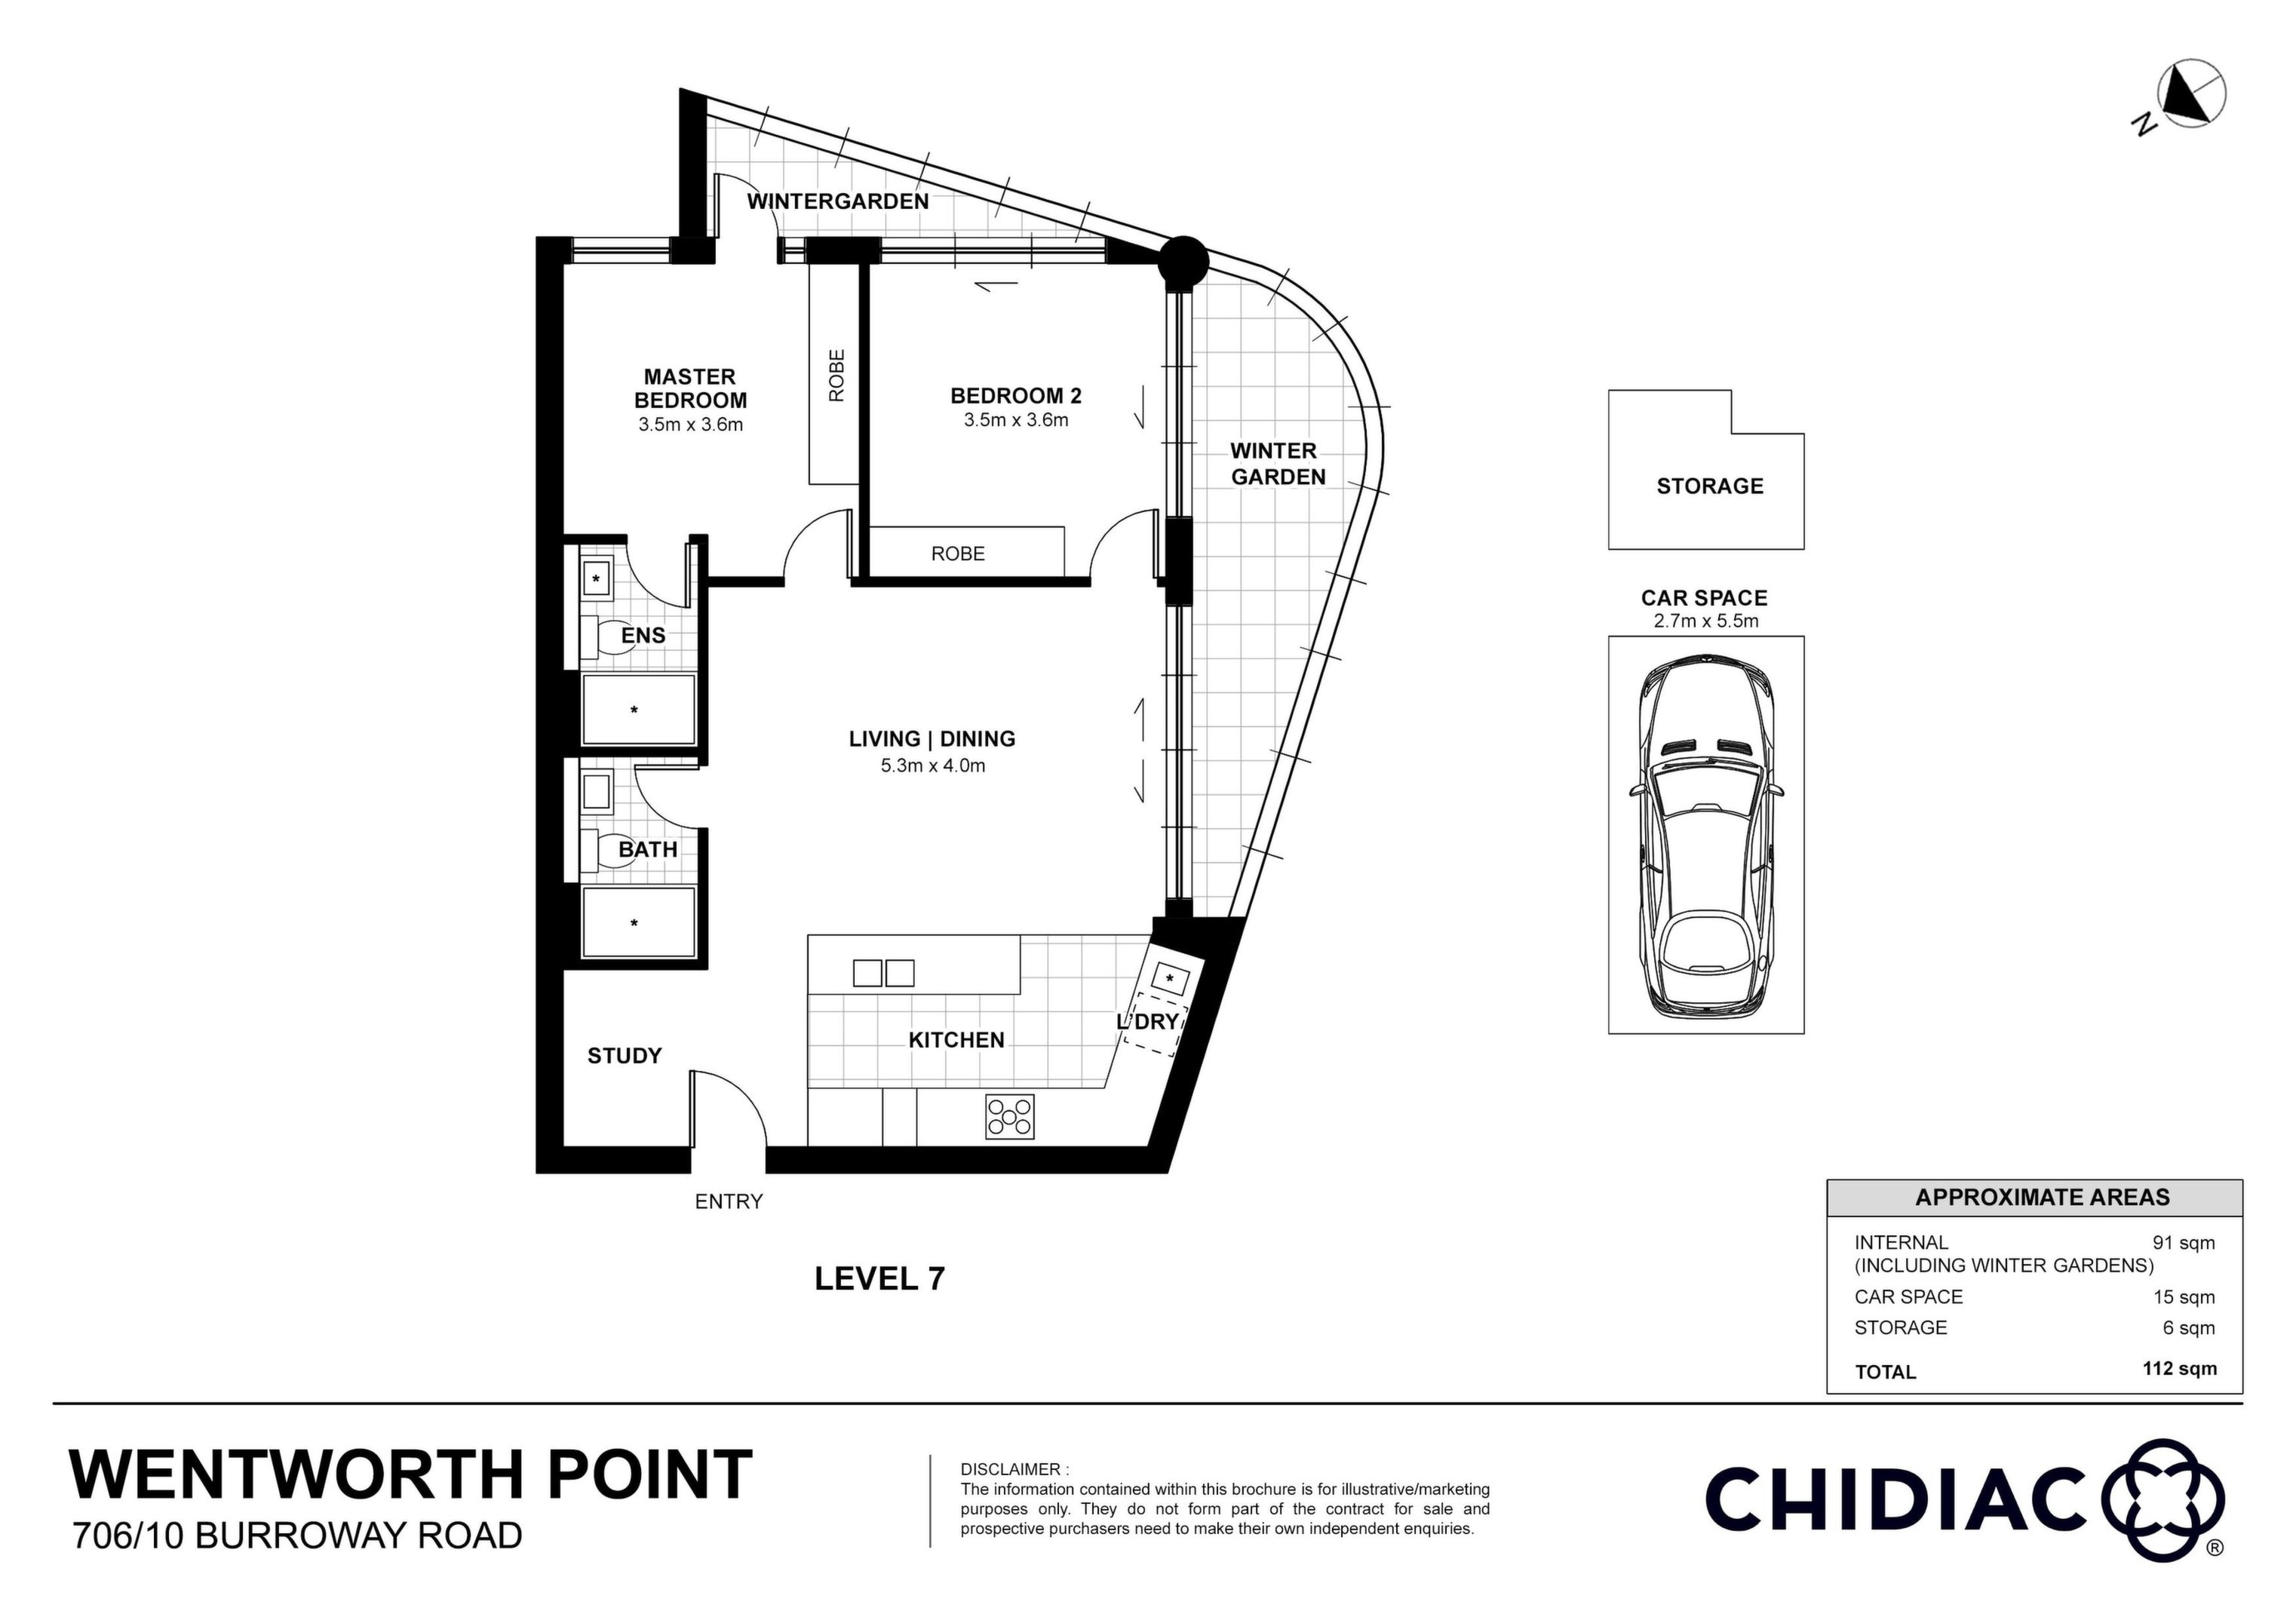 706/10 Burroway Road, Wentworth Point Sold by Chidiac Realty - floorplan